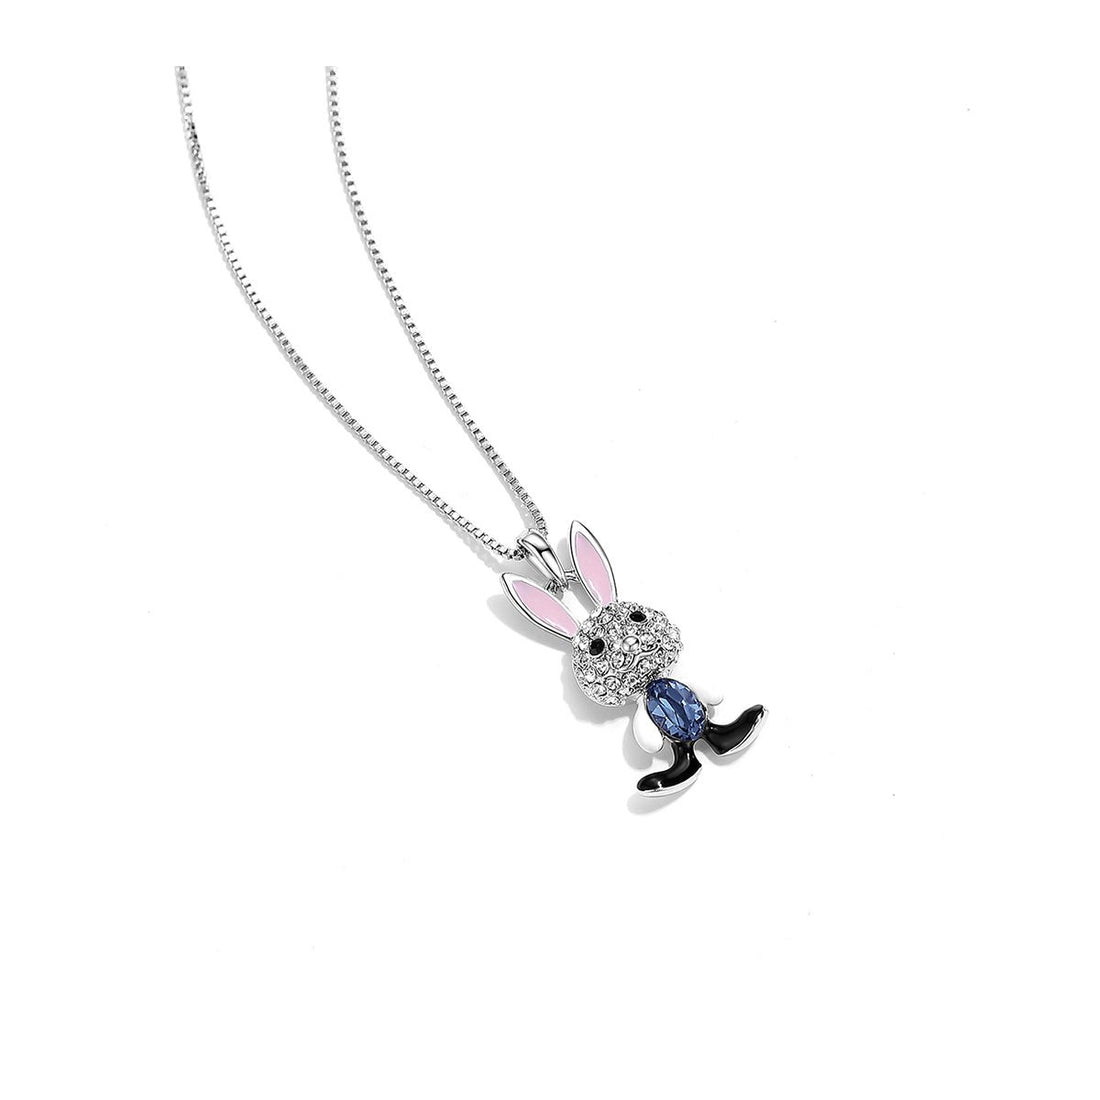 Mr. Bunny Pendant Silver Necklace - 0cm